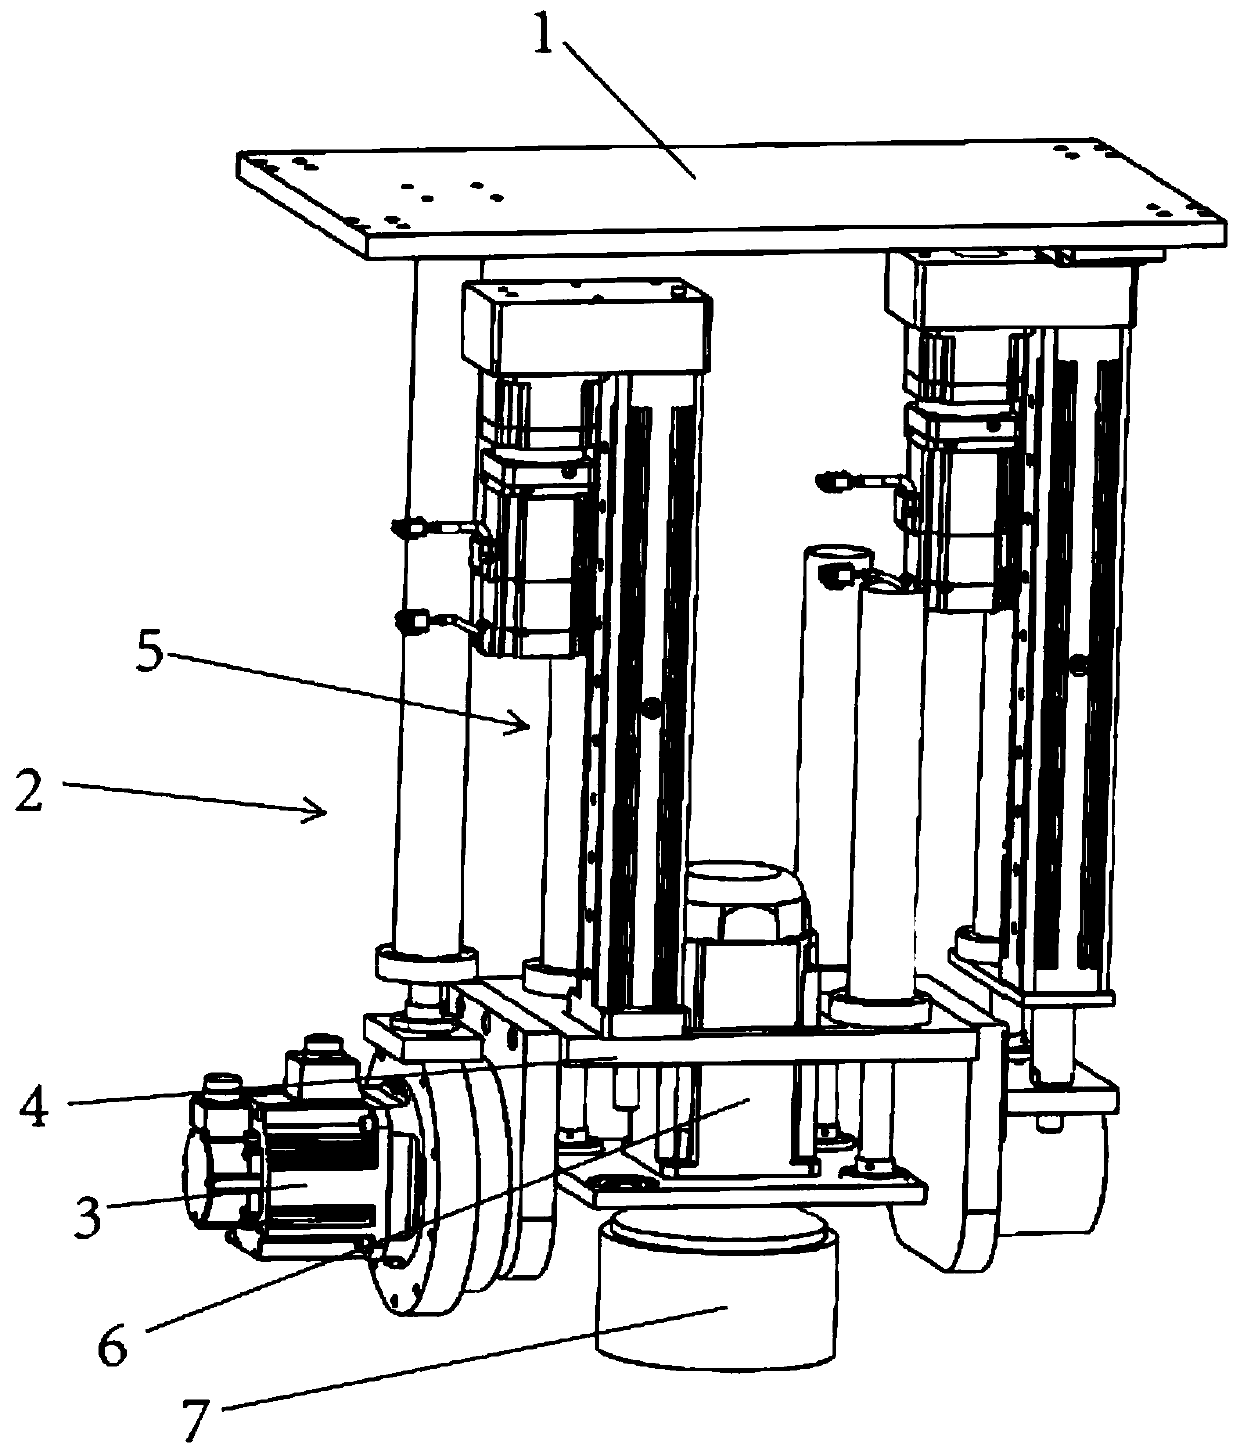 Rail grinding device